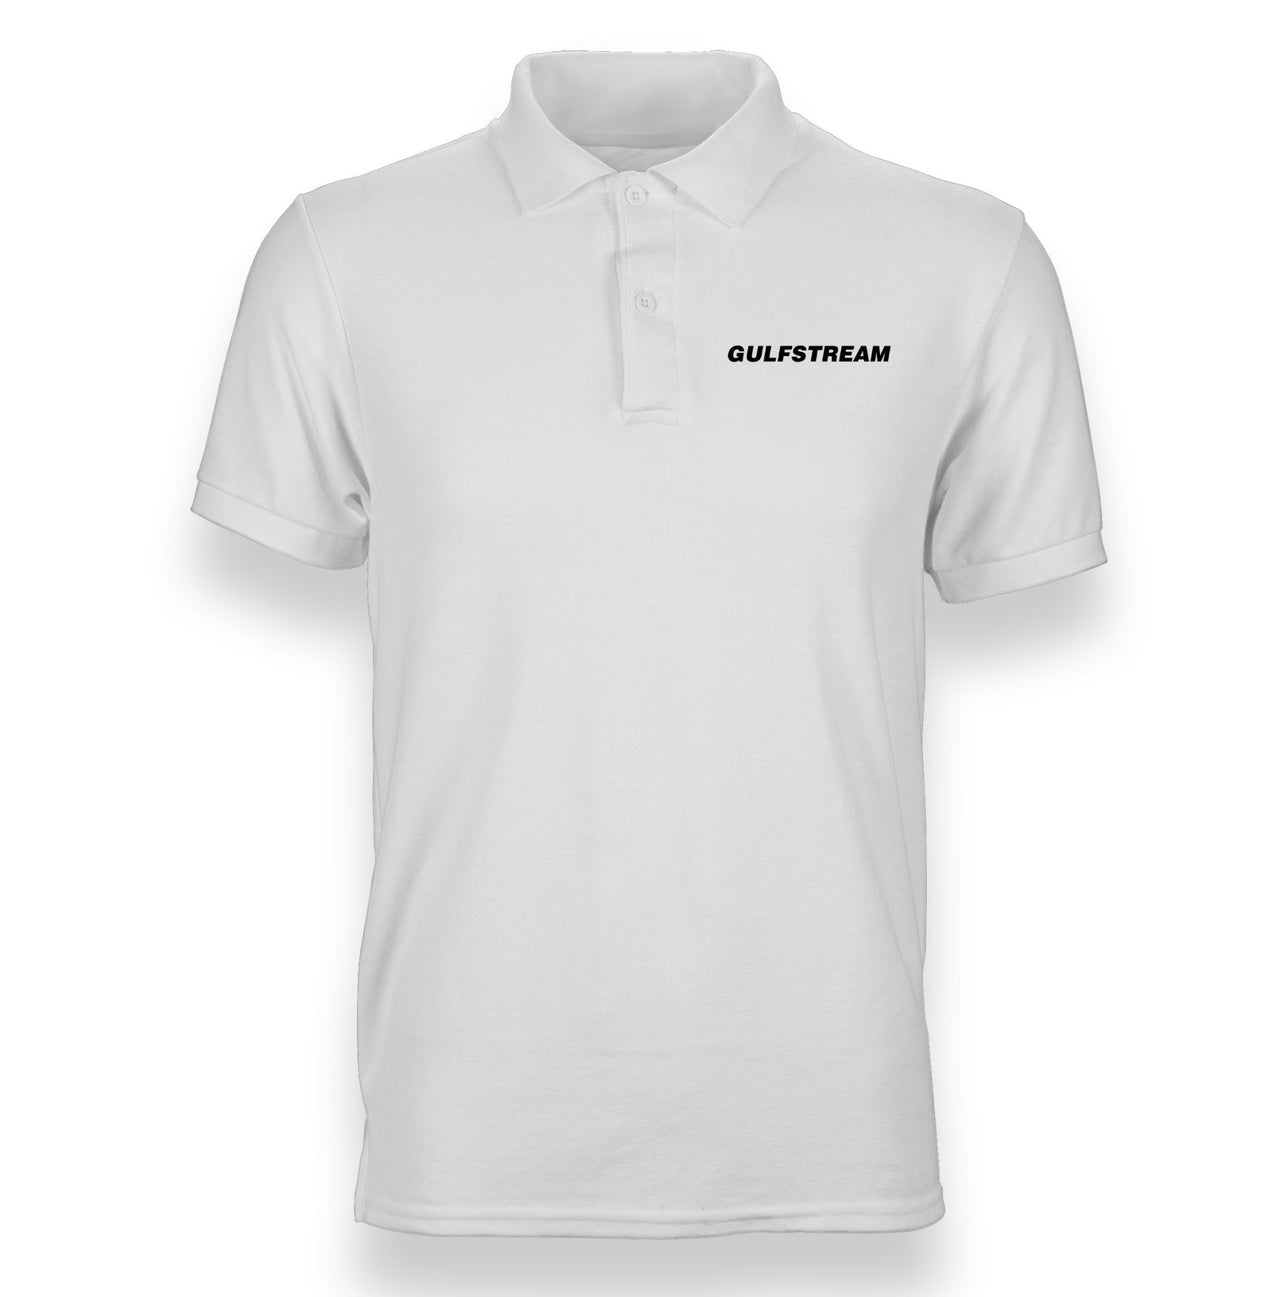 Gulfstream & Text Designed "WOMEN" Polo T-Shirts